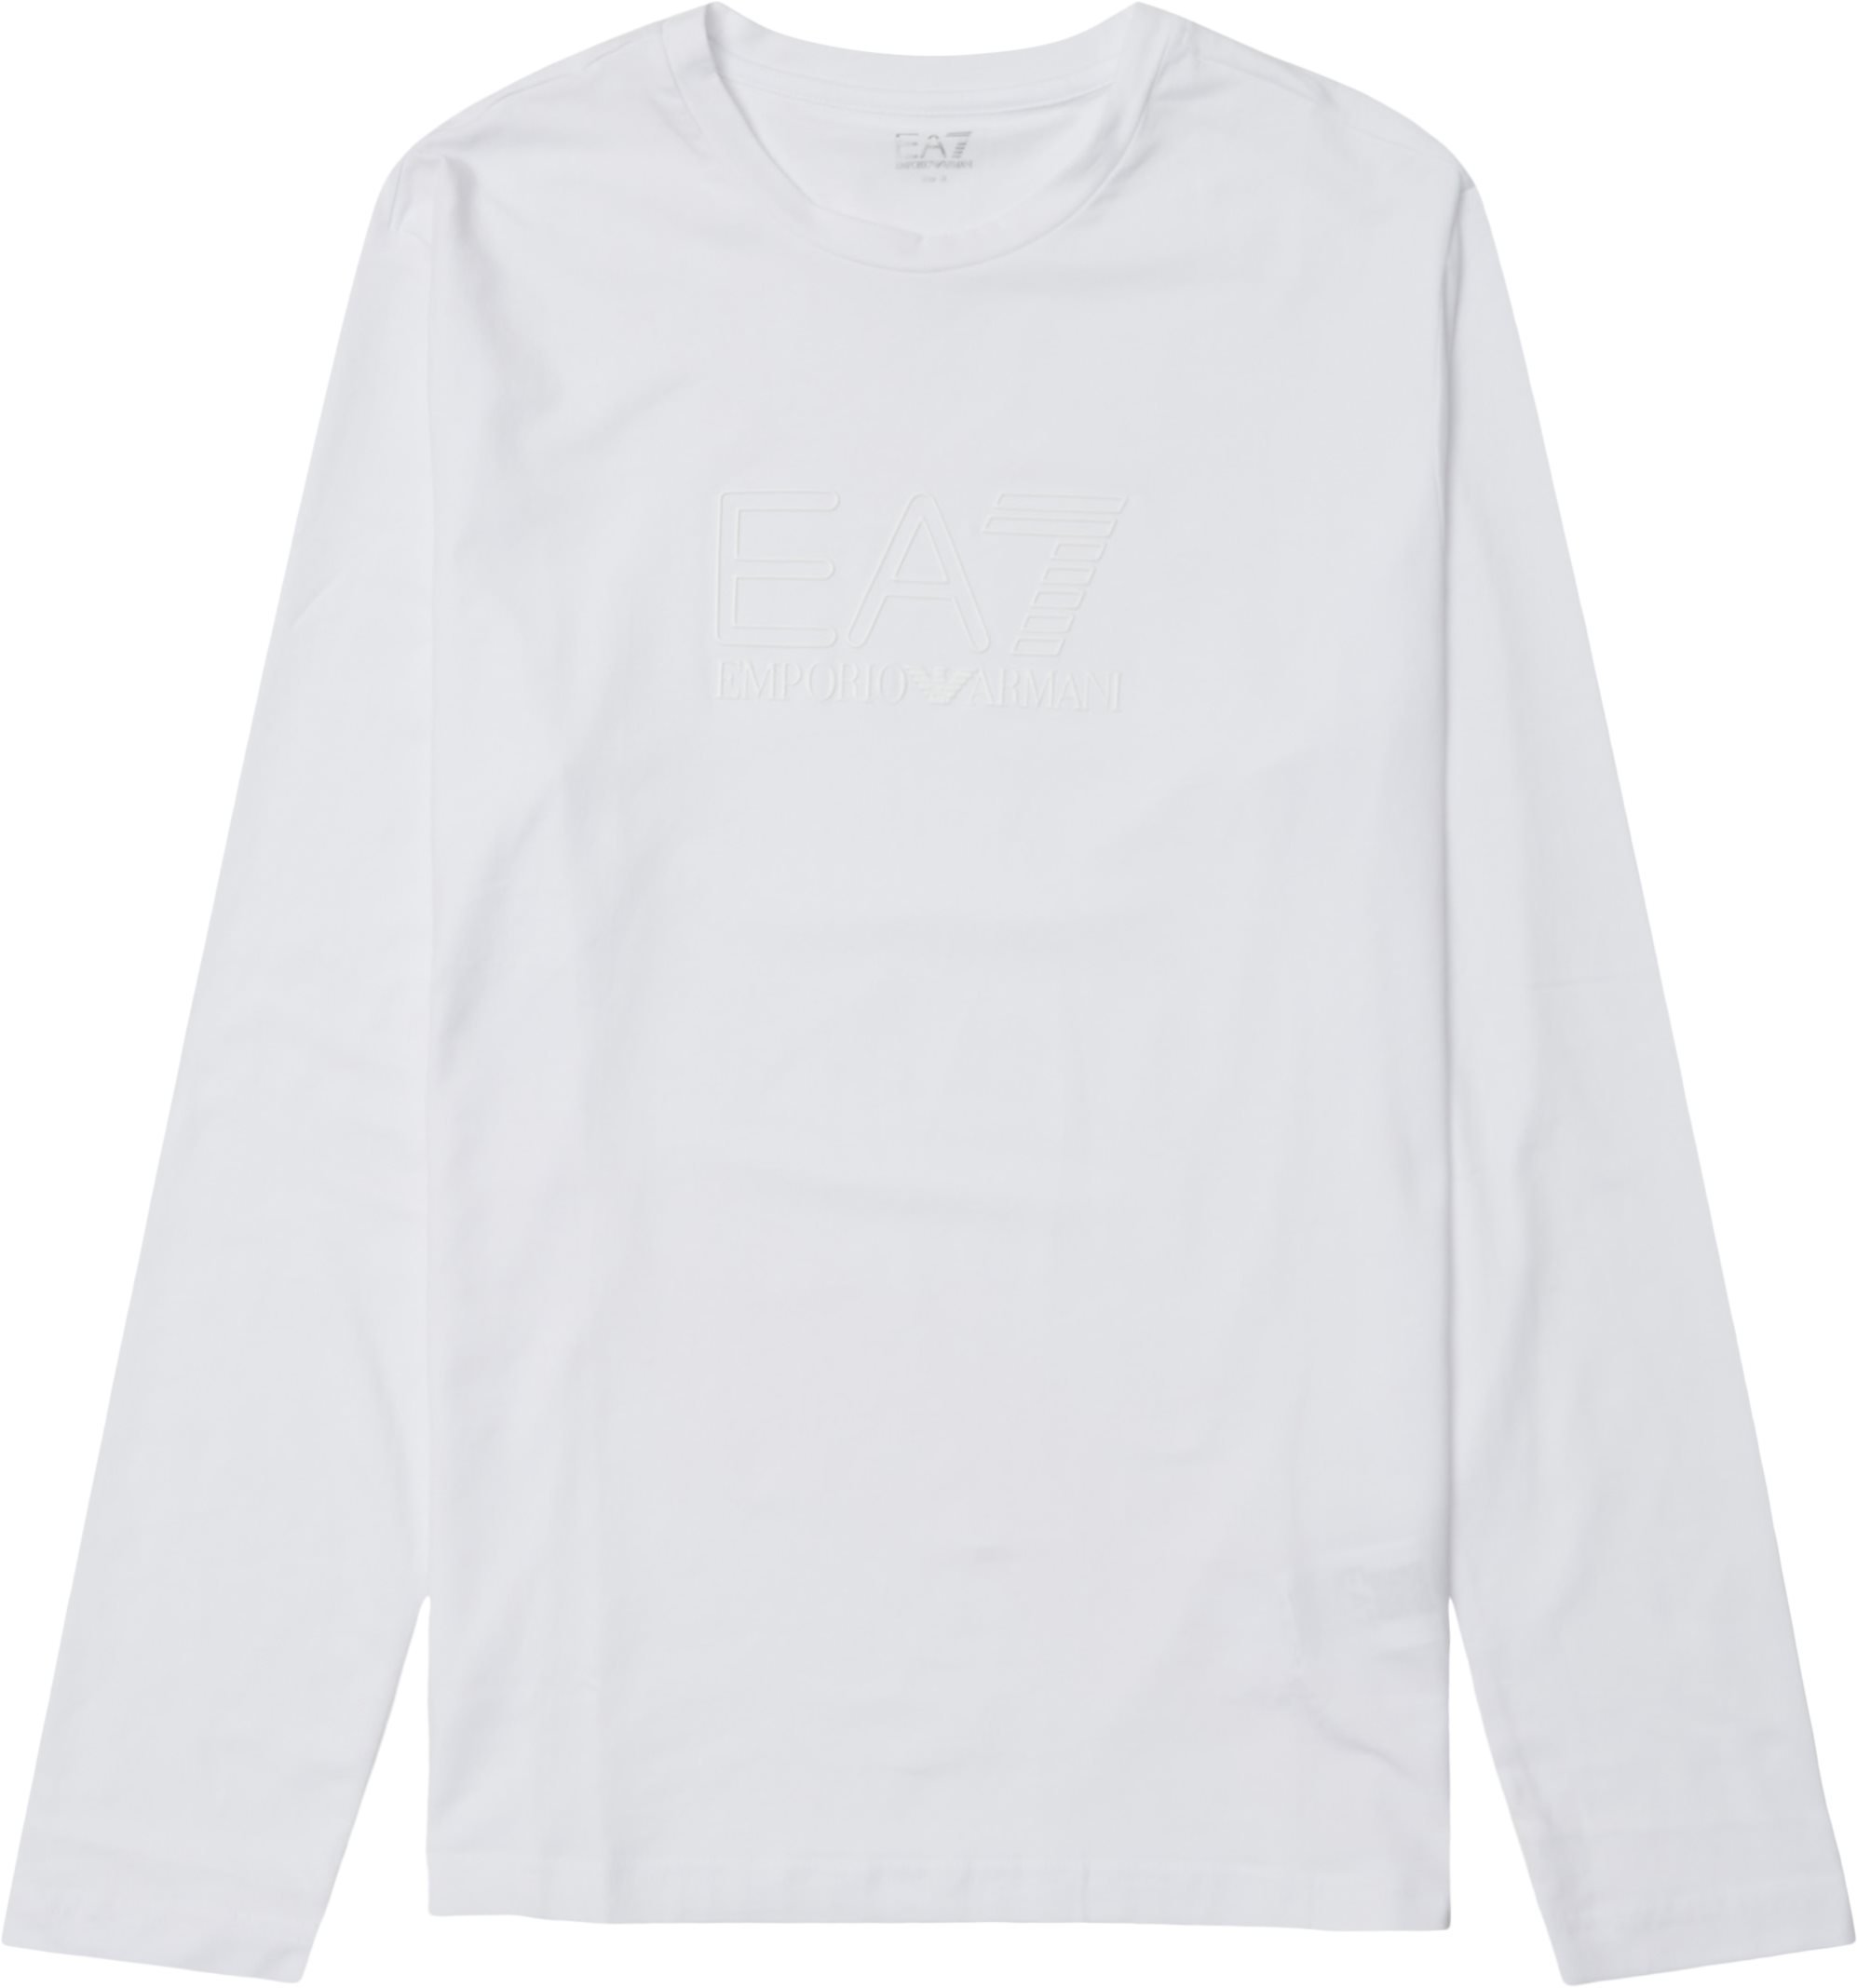 Pj03z-3lpt64 - T-shirts - Regular fit - White